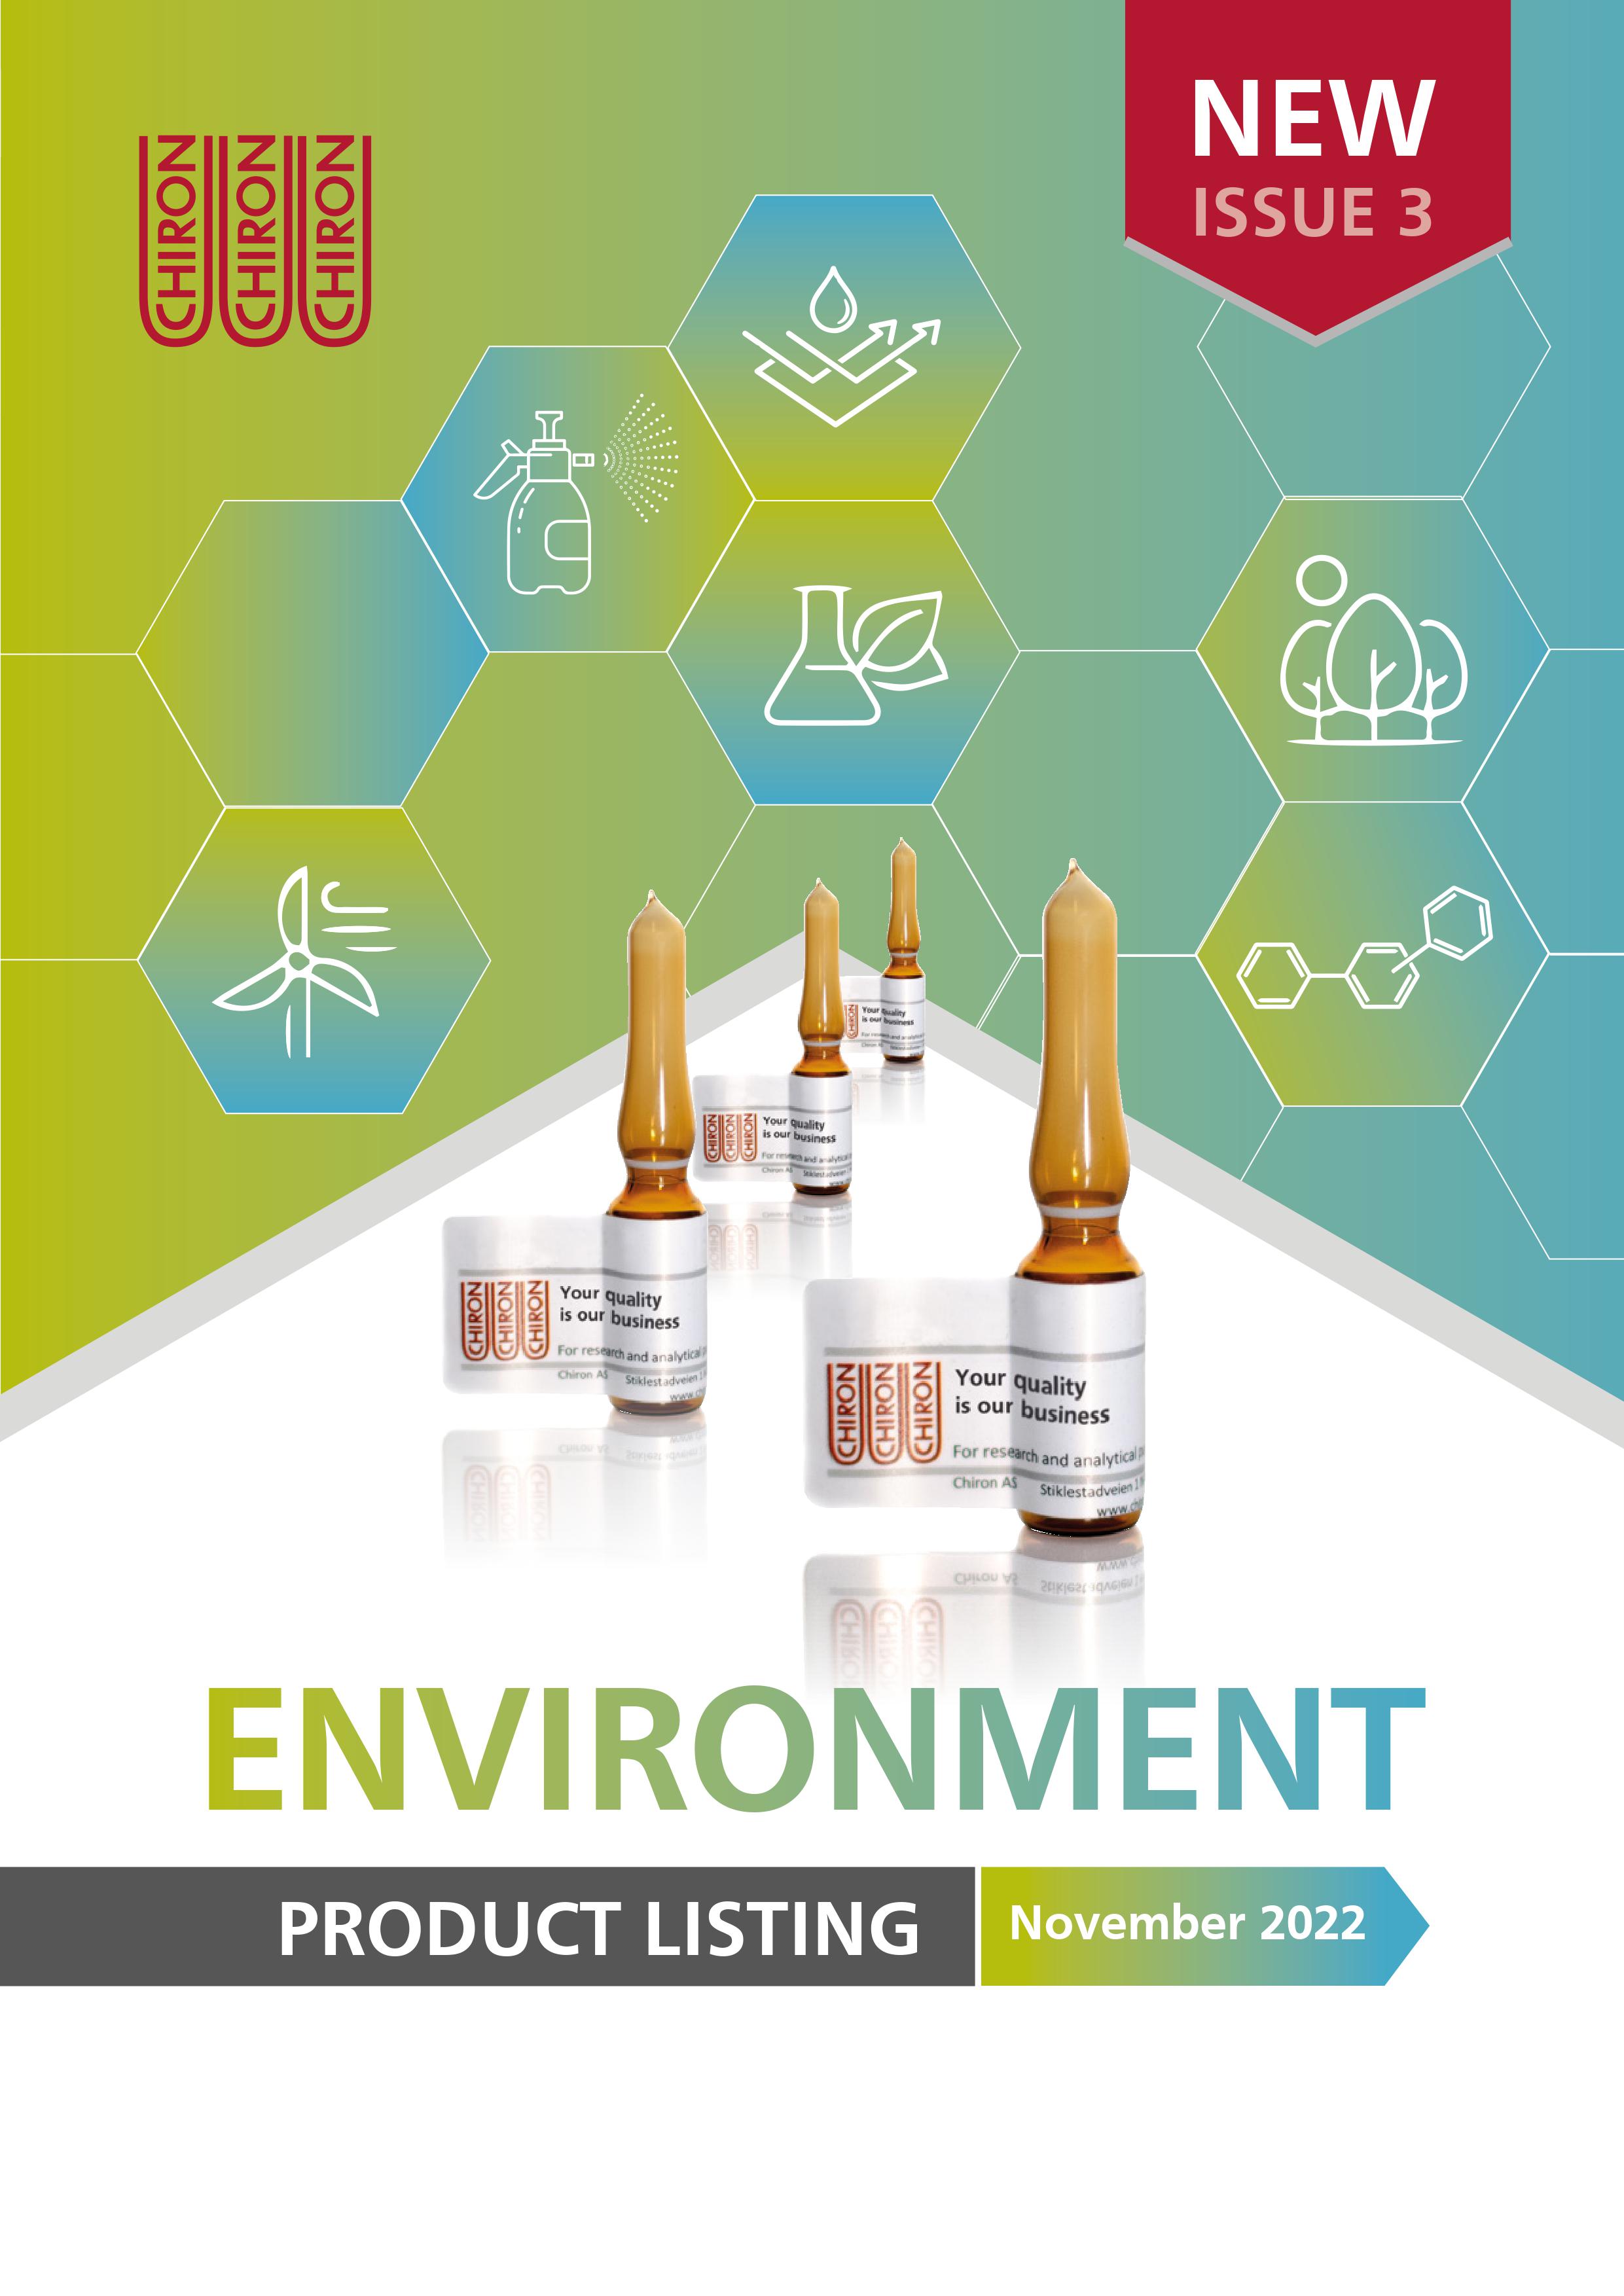 New Environmental Product Issue 3 | November 2022